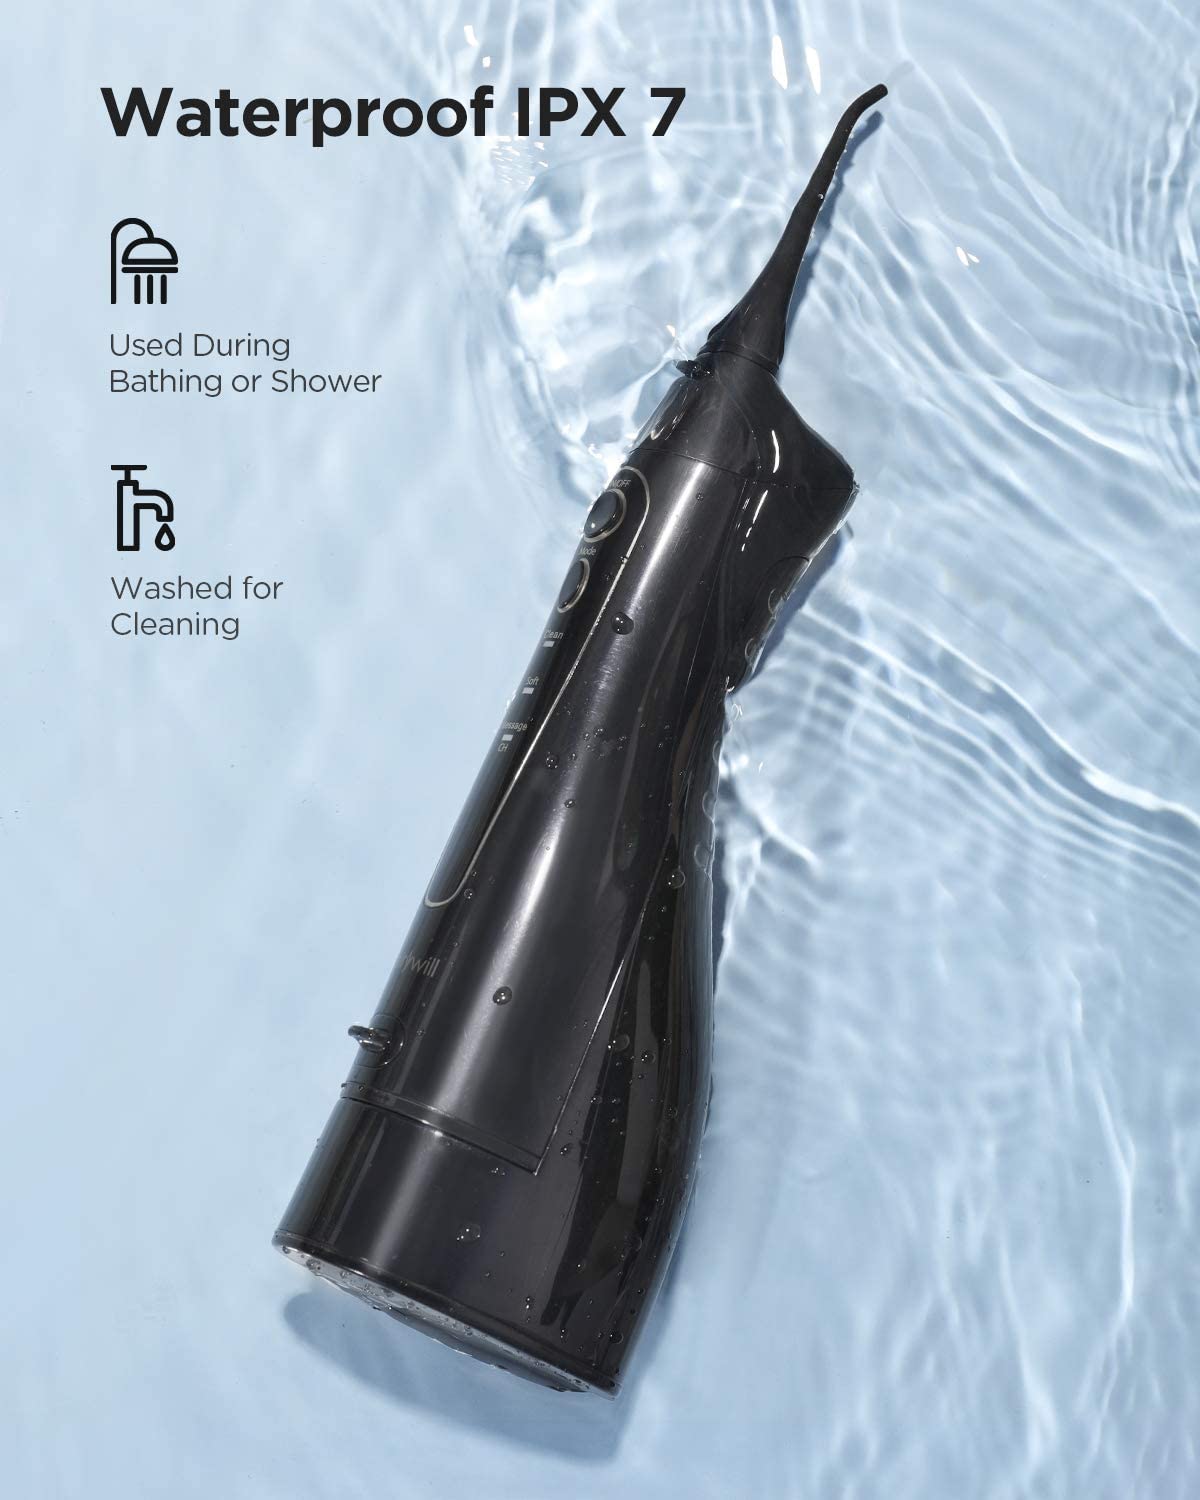 Fairywill 5020E 300ML Water Flosser with 3 Modes 8 Jet Tips - جهاز تنظيف الأسنان المائي 5020 إي